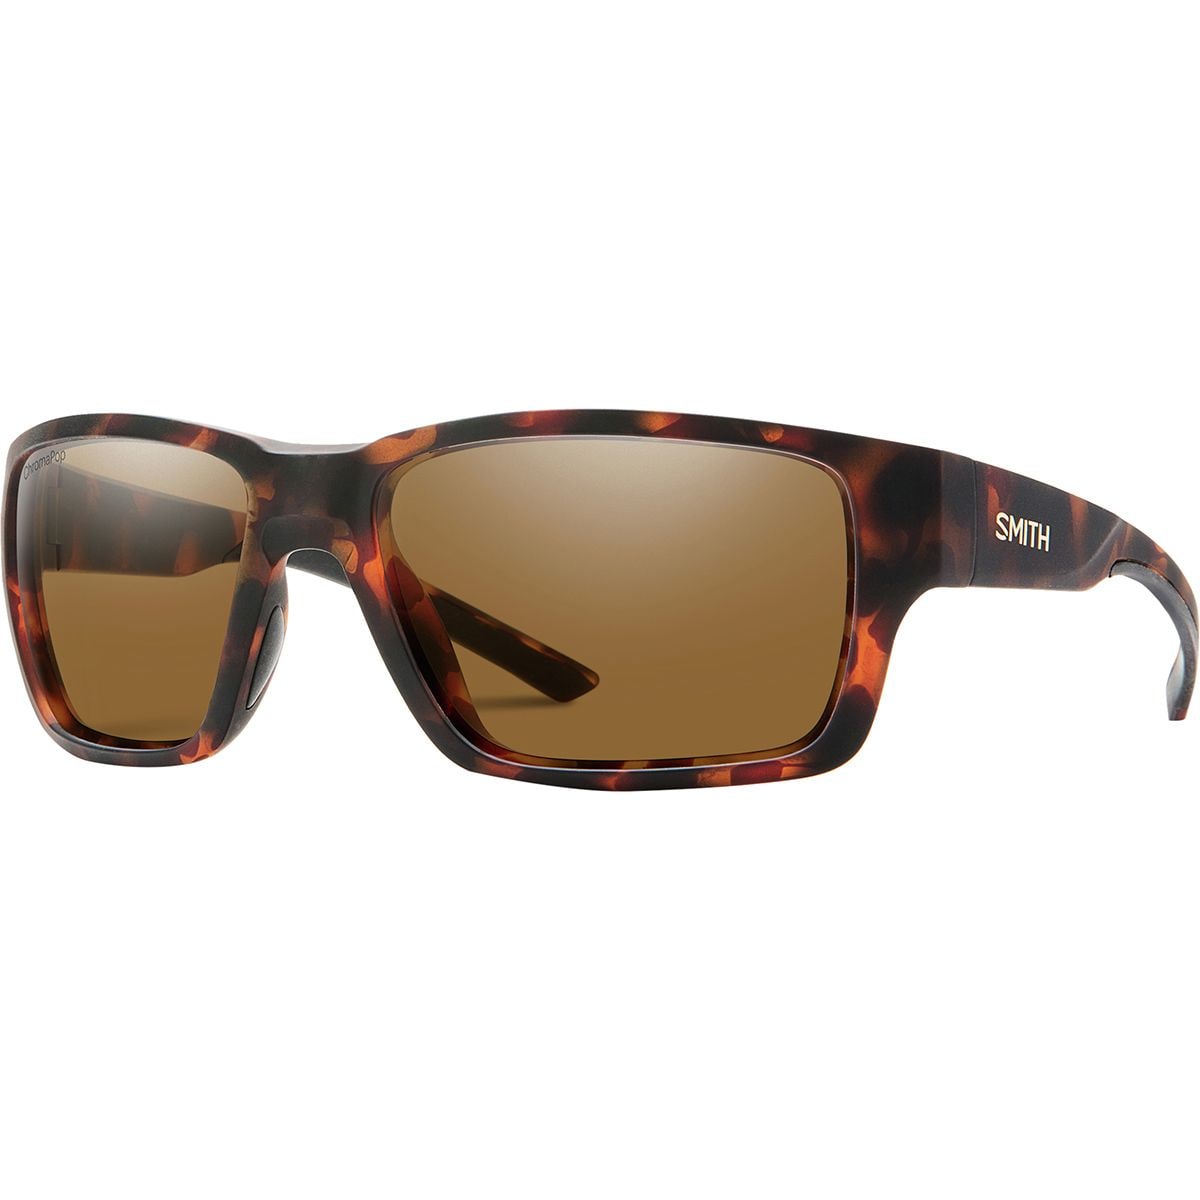 Smith Outback Chromapop Polarized Sunglasses - Men's